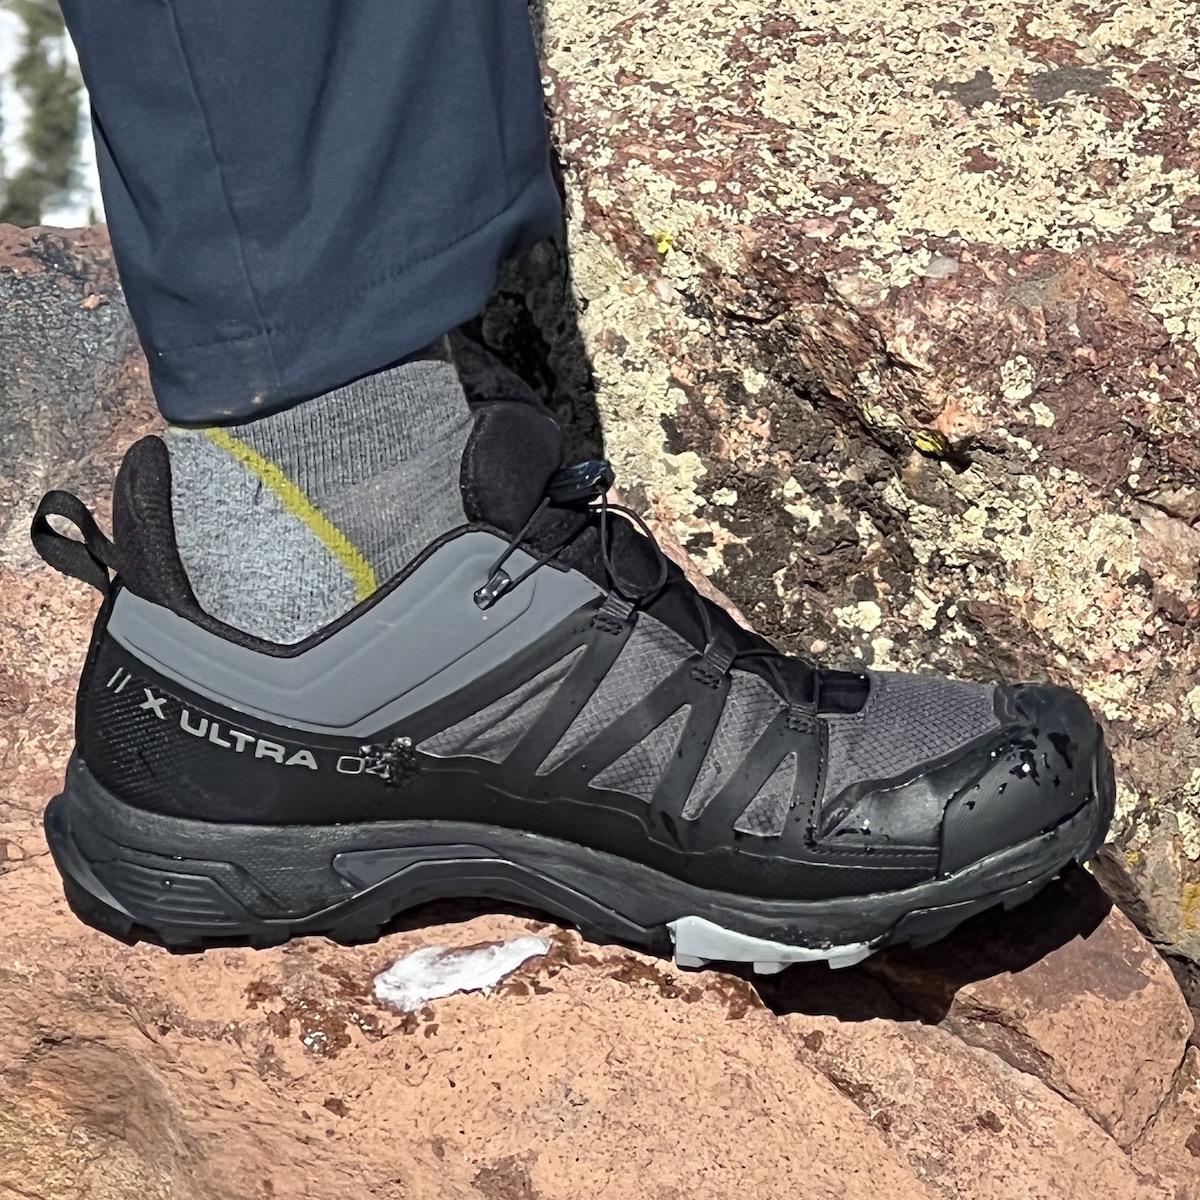 Salomon X Ultra 4 GTX Hiking Shoe Review (vs X Ultra 3 GTX)